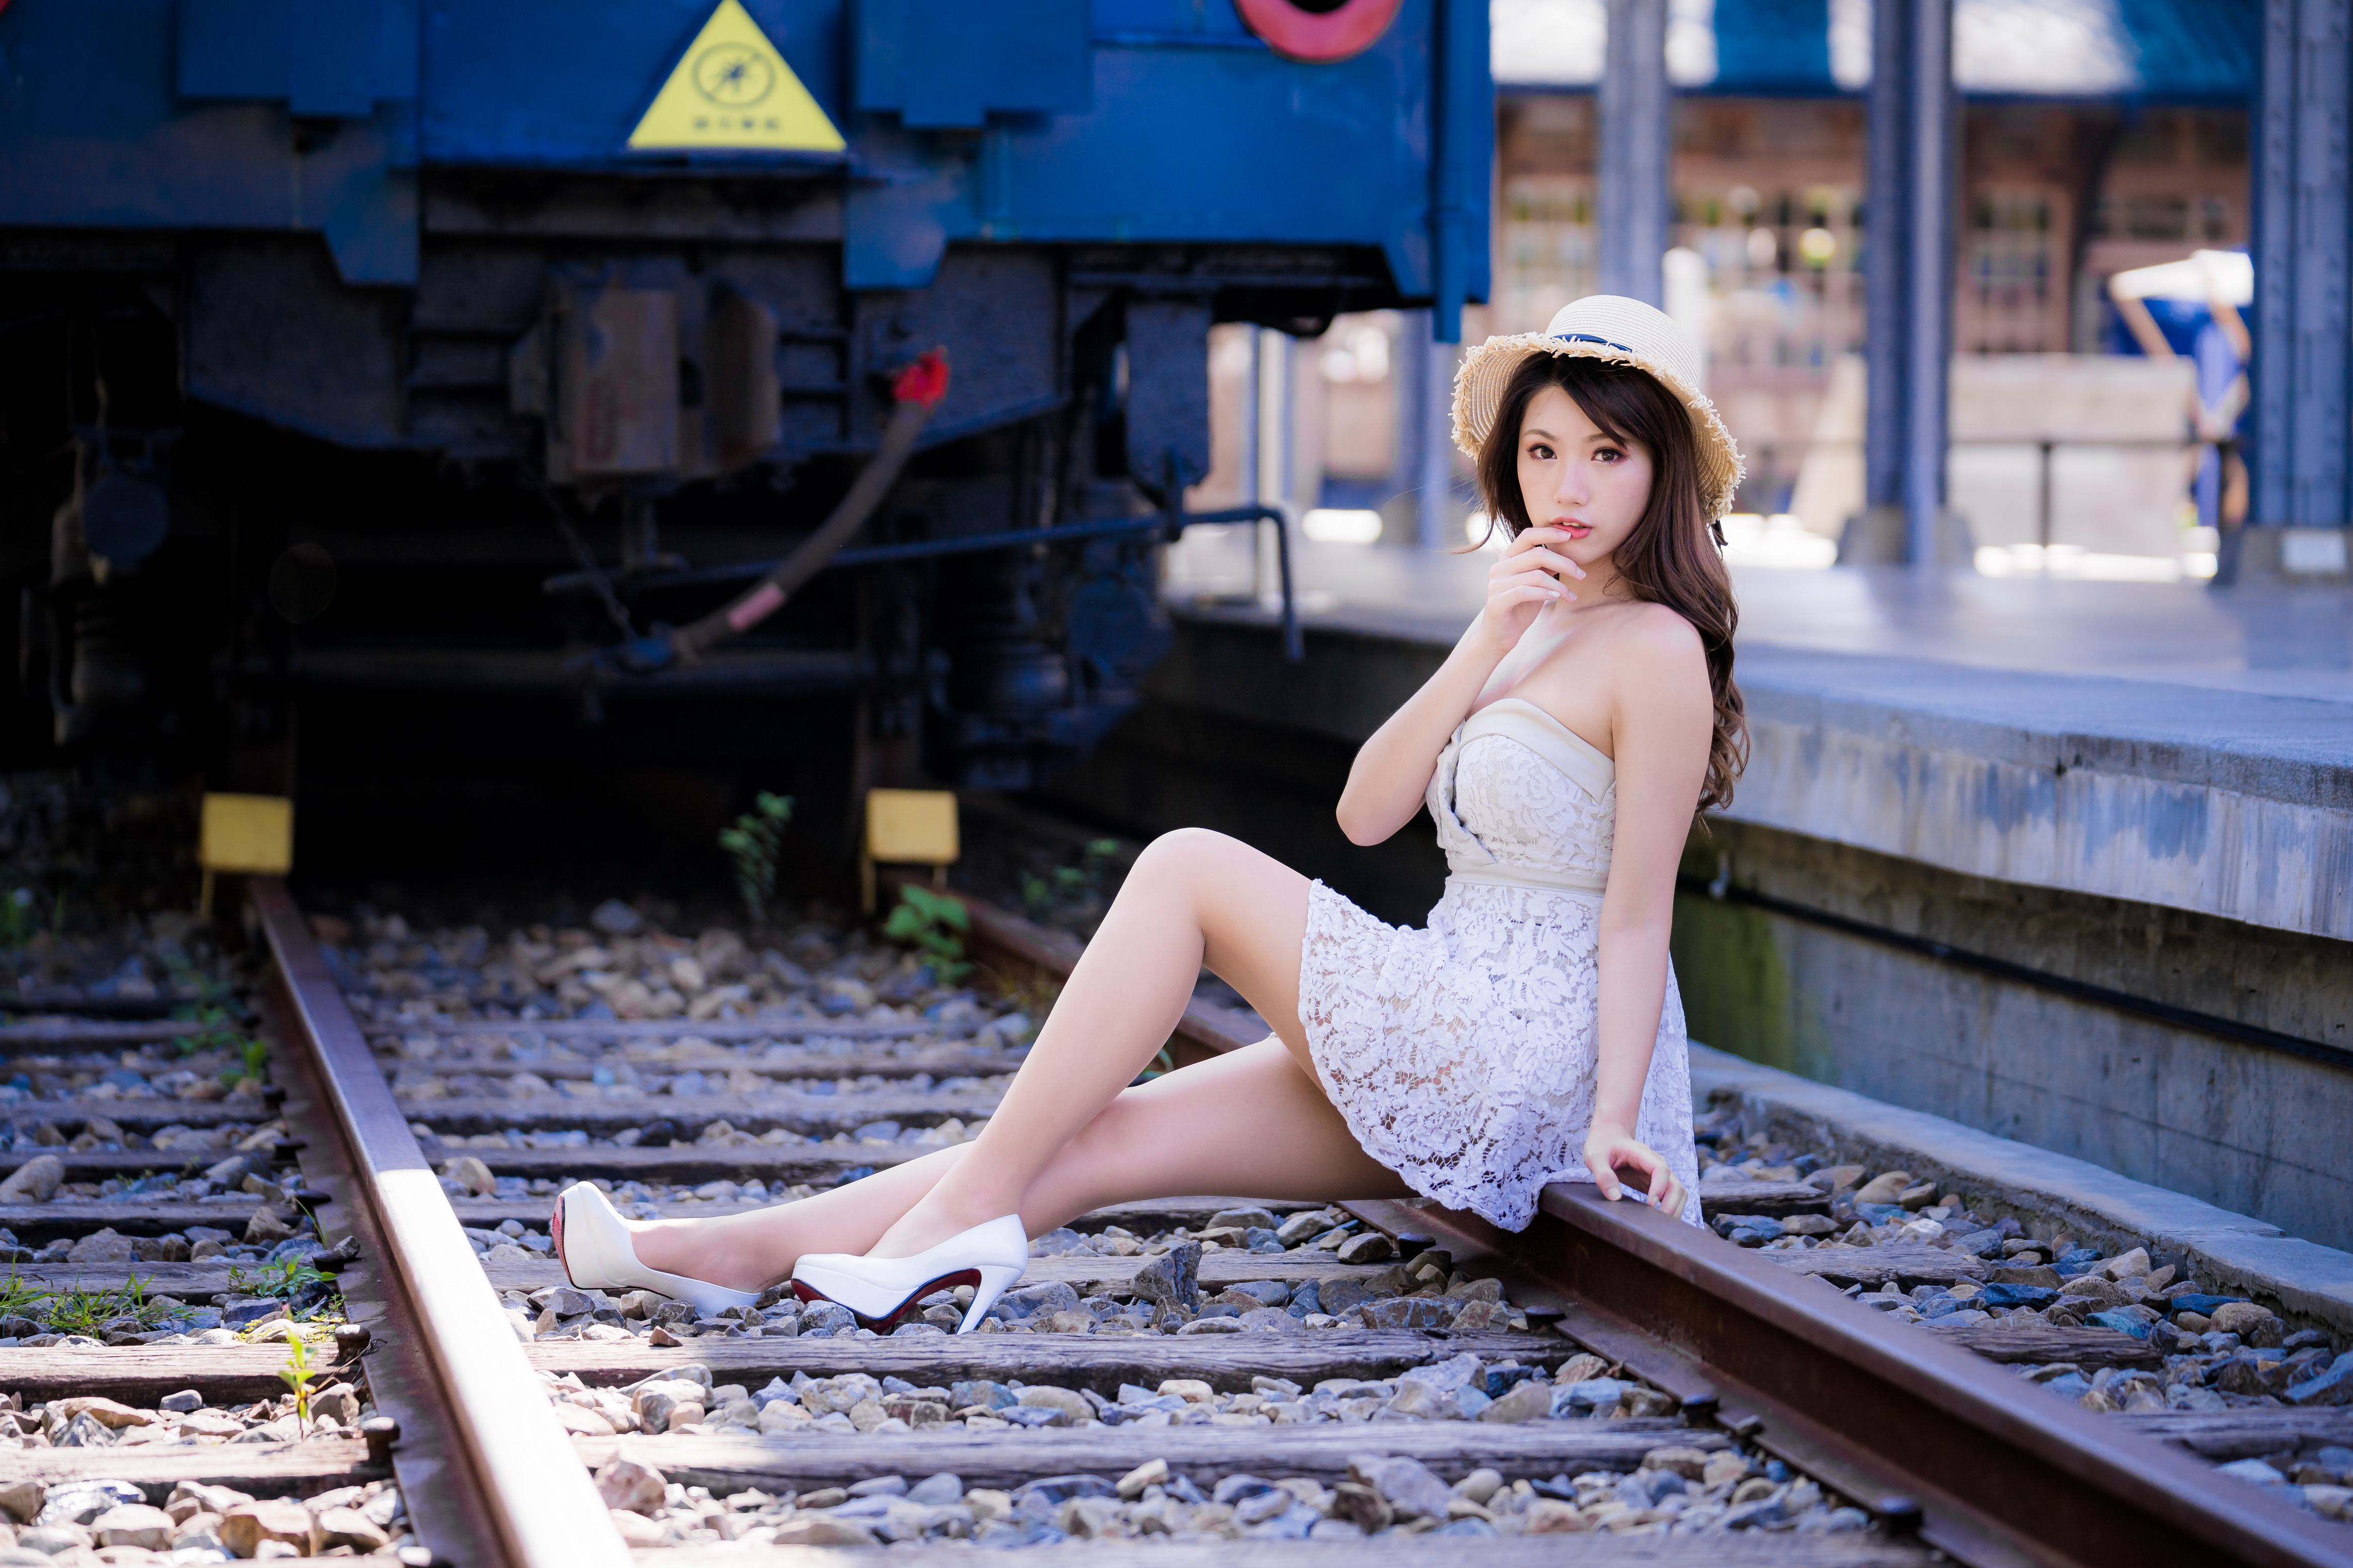 Asian Model Women Long Hair Dark Hair White High Heels Sitting Railway Train Train Station Straw Hat 4562x3041